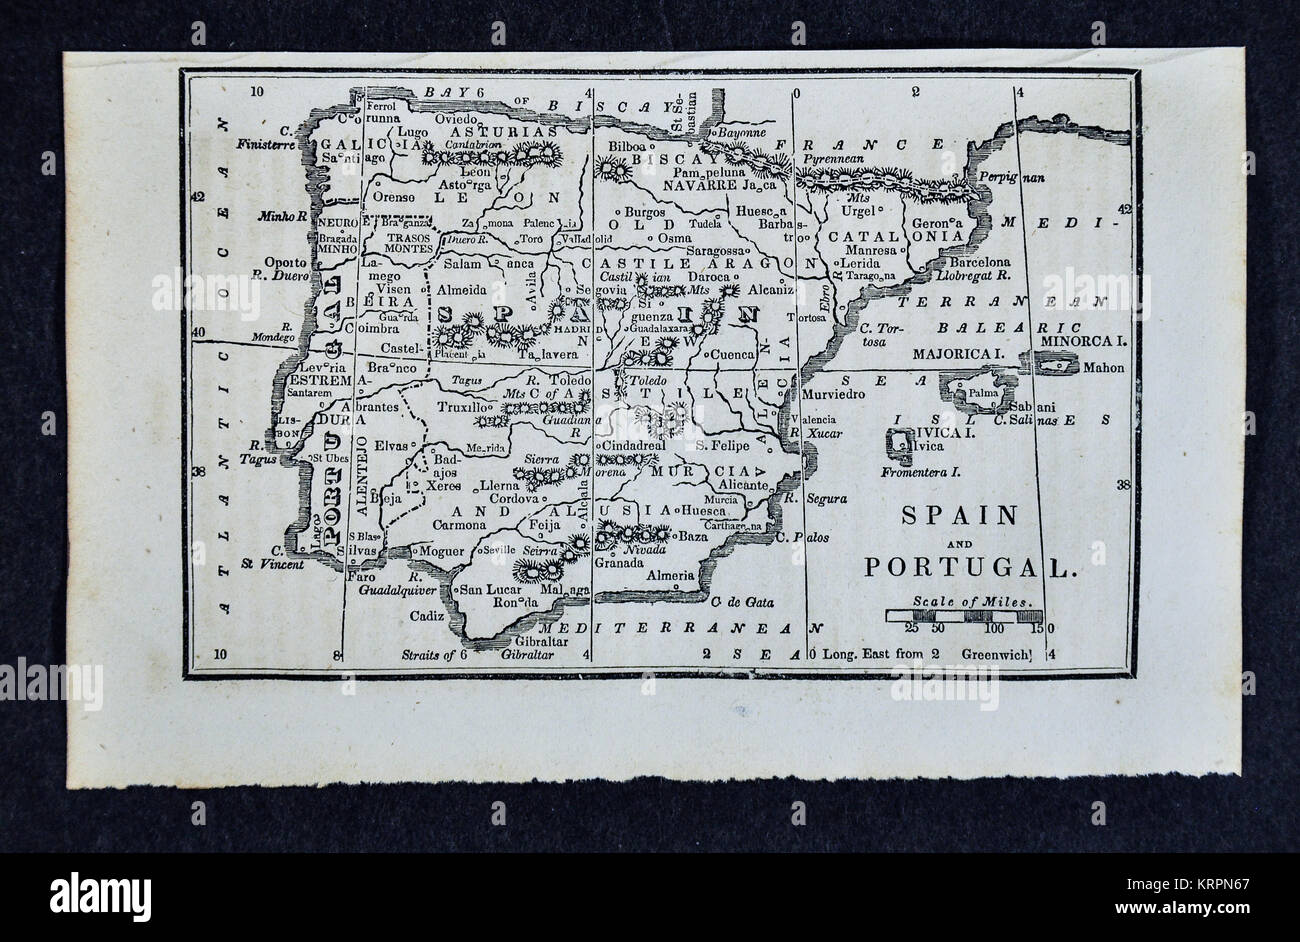 1830 Nathan Hale Mappa - Spagna Portogallo - Lisbona madrid barcellona Foto Stock